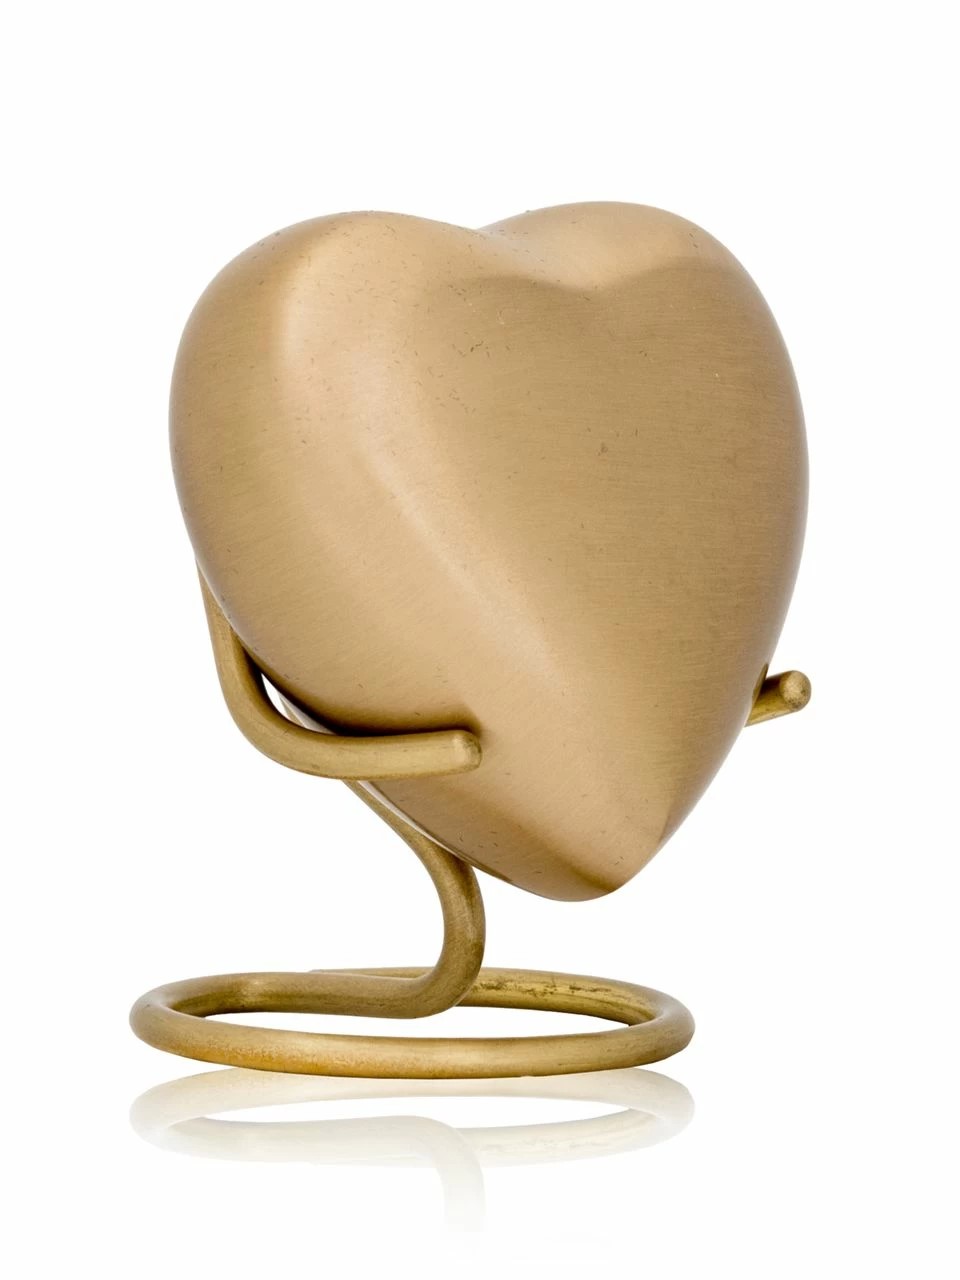 Gold Keepsake Heart
$50.00